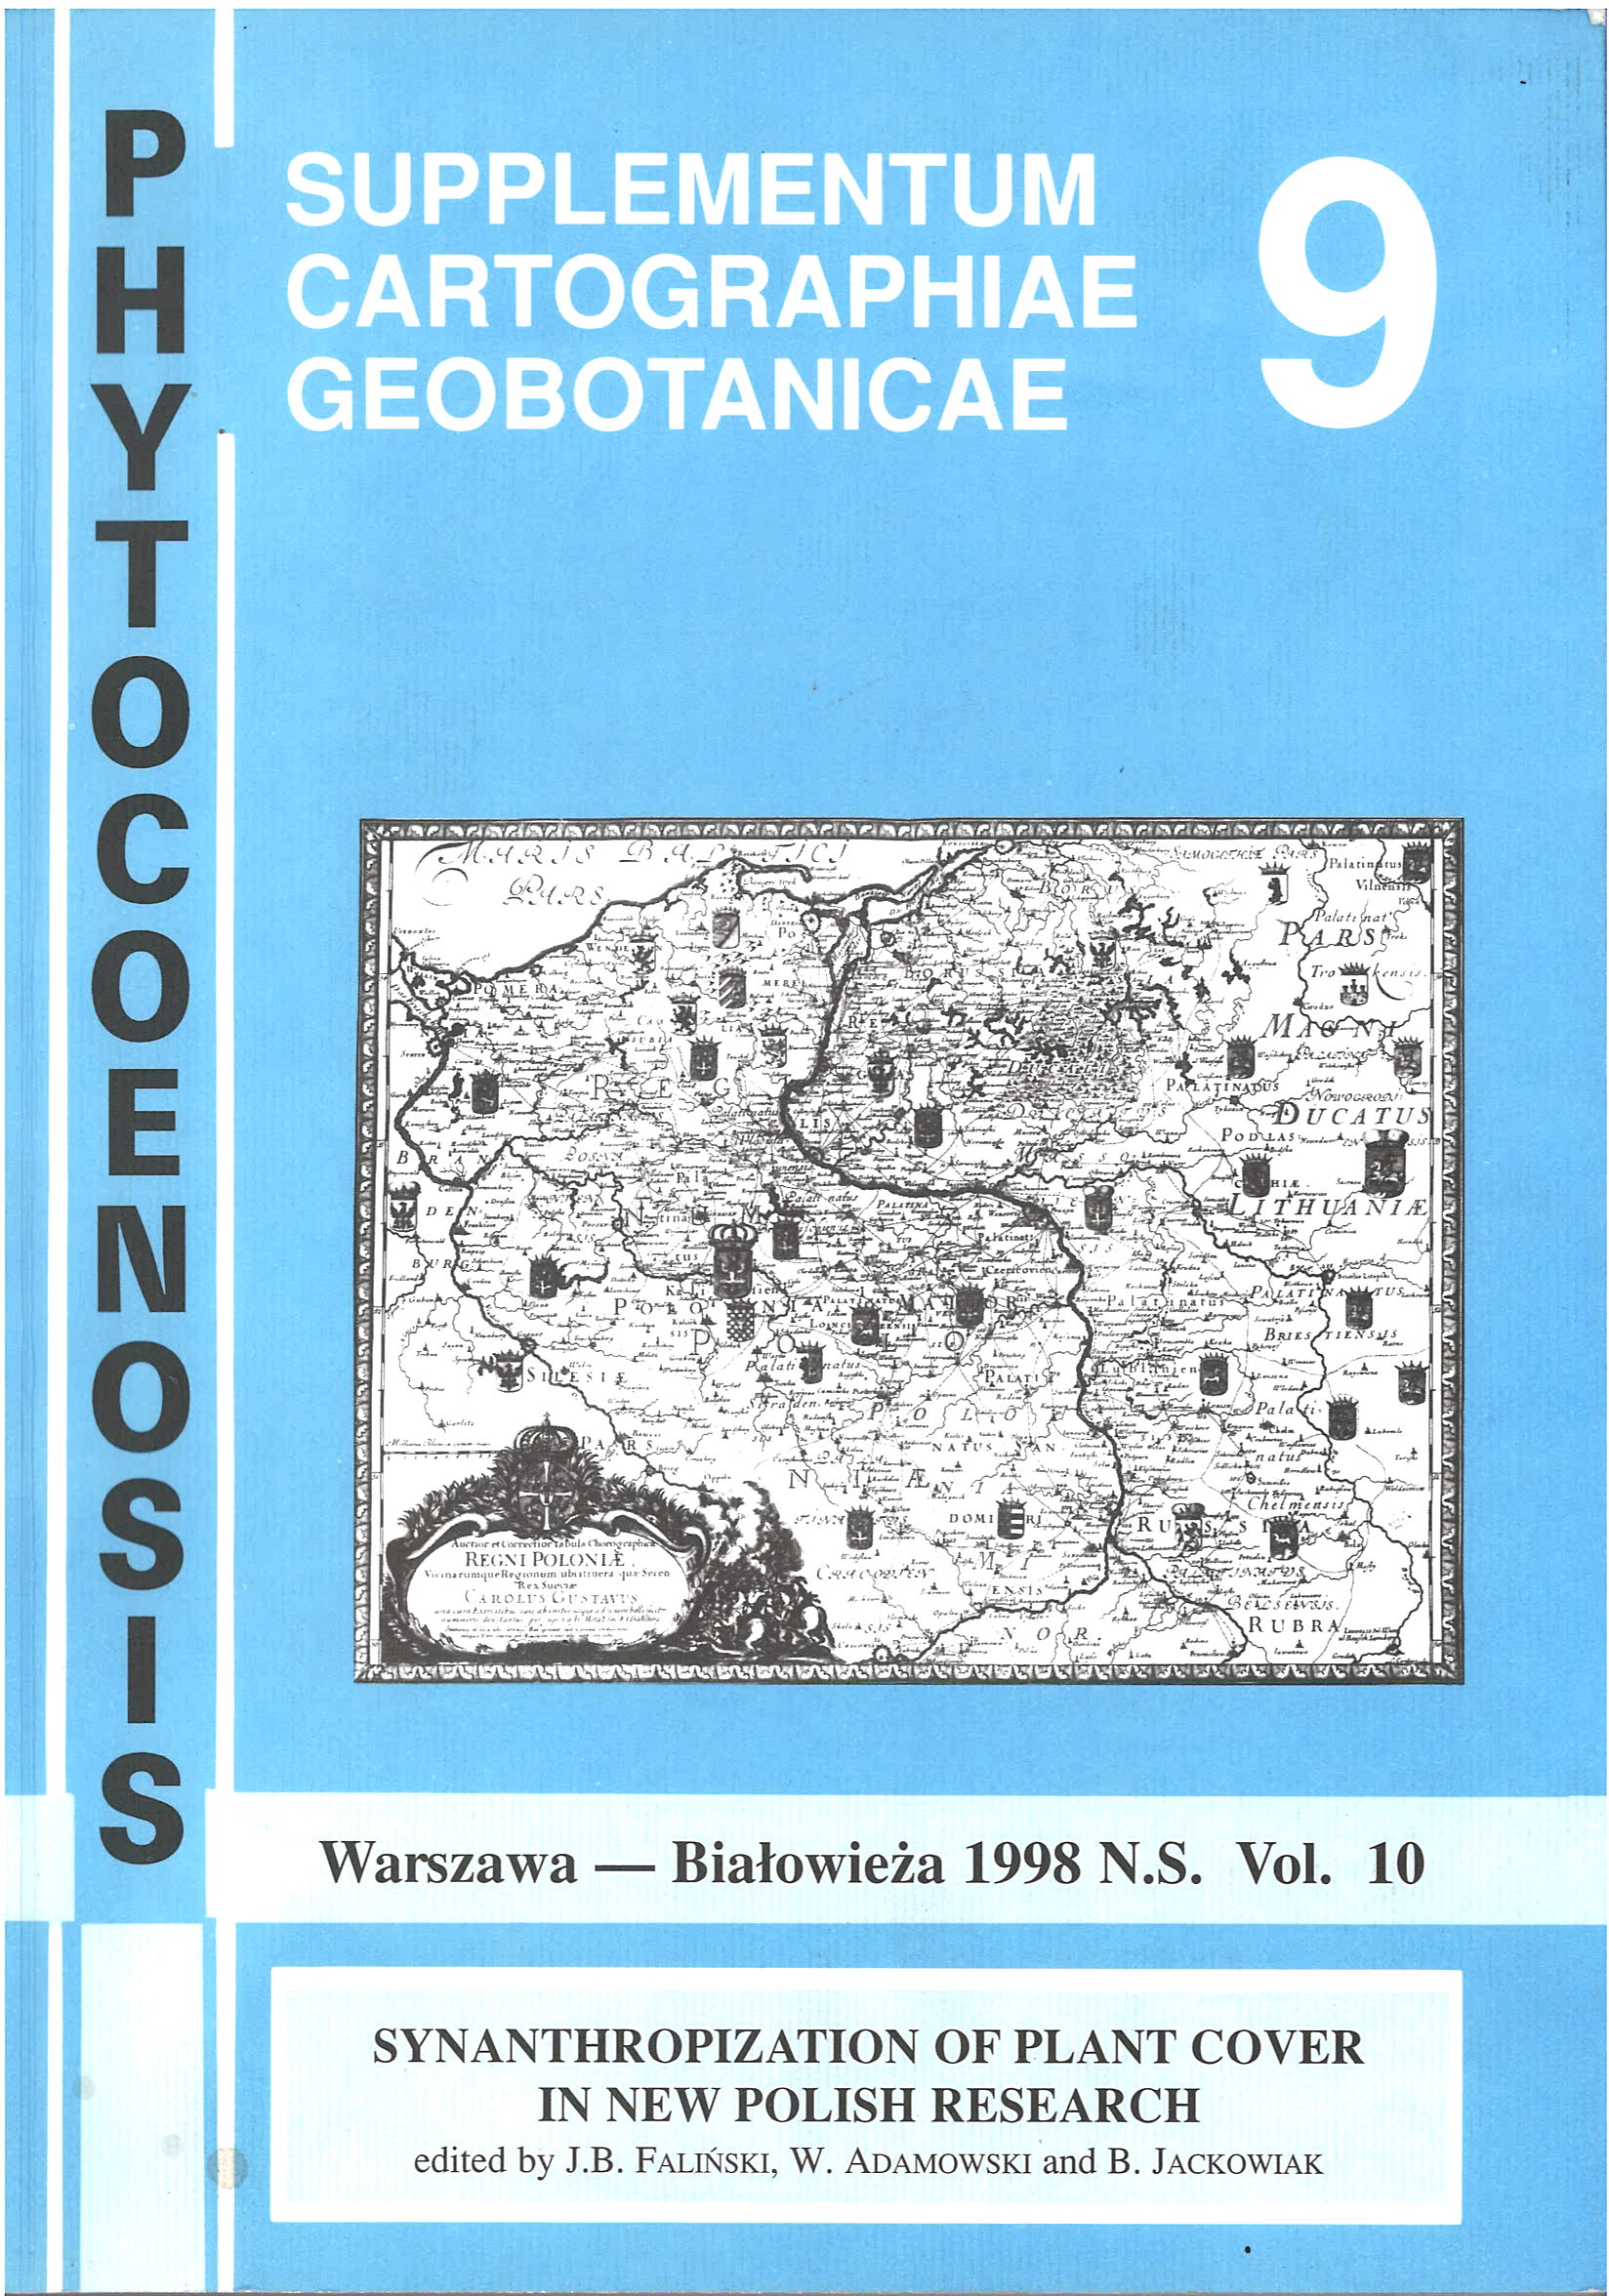 Phytocoenosis (N.S.) 10, Supplementum Cartographiae Geobotanicae 9